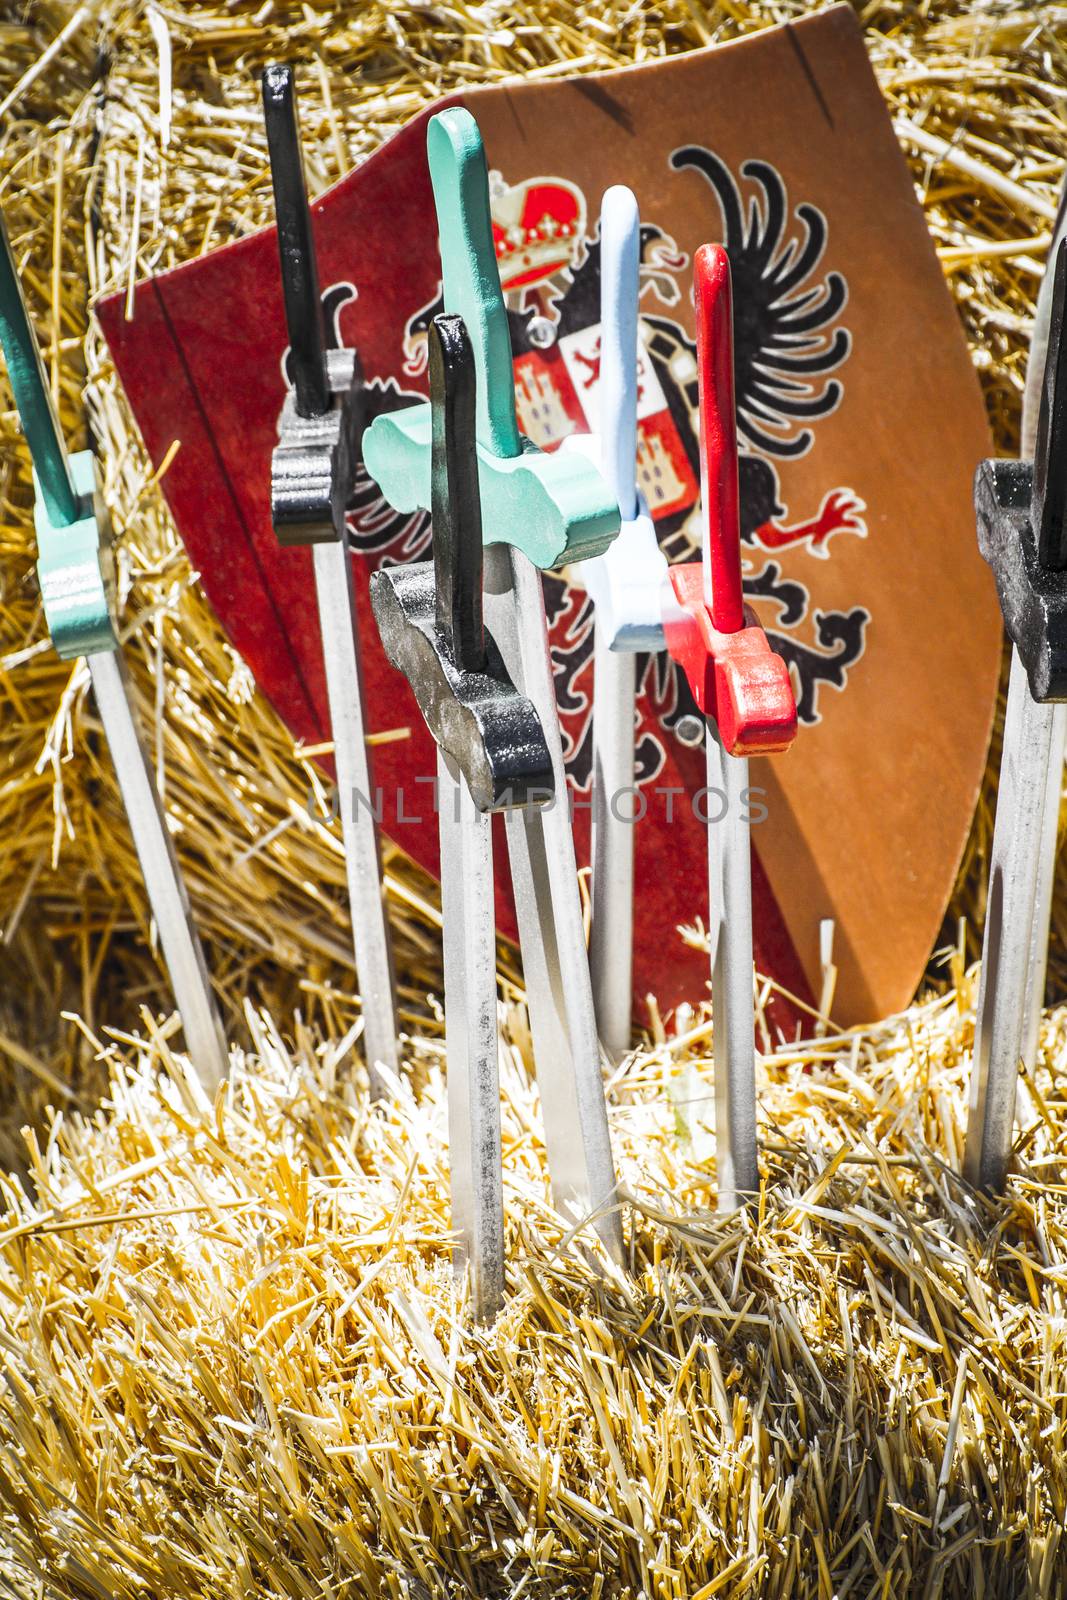 handmade wooden swords in a medieval fair by FernandoCortes